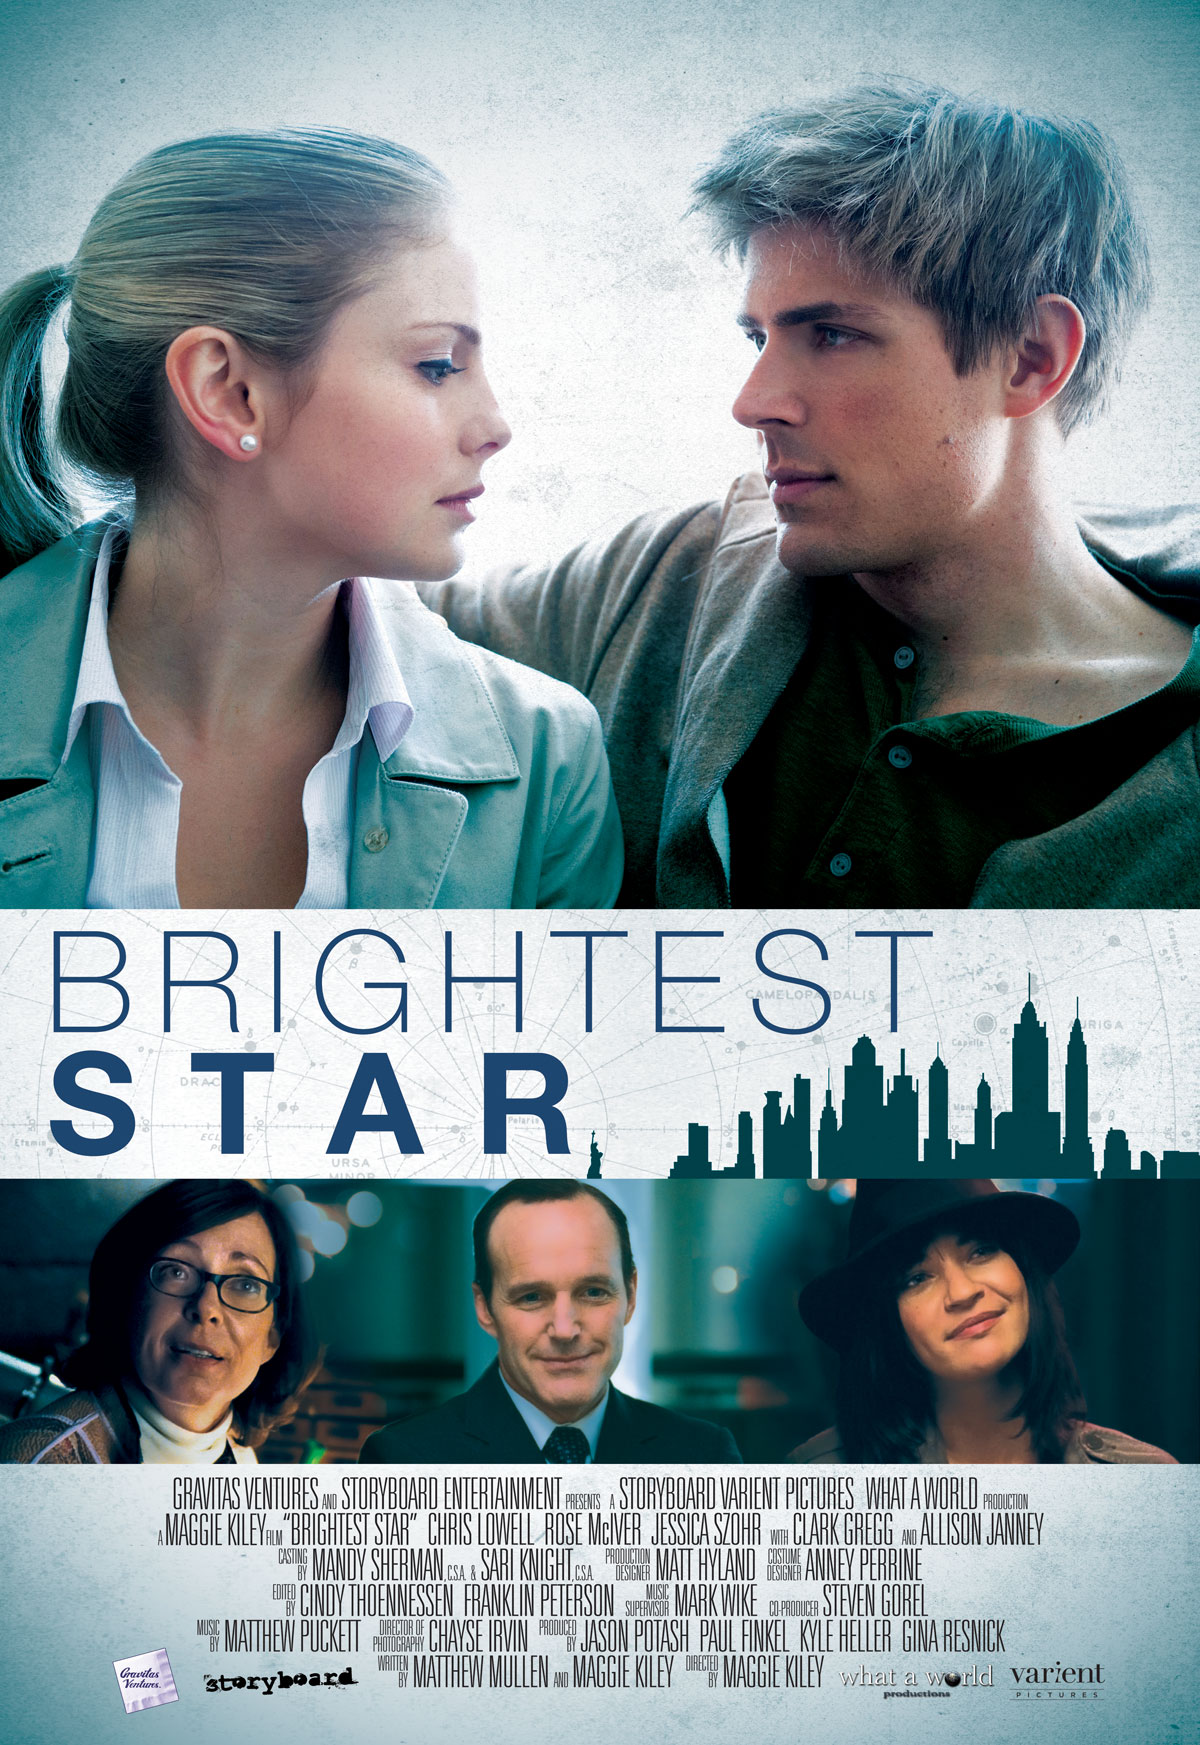 Allison Janney, Clark Gregg, Rose McIver, Jessica Szohr and Chris Lowell in Brightest Star (2013)